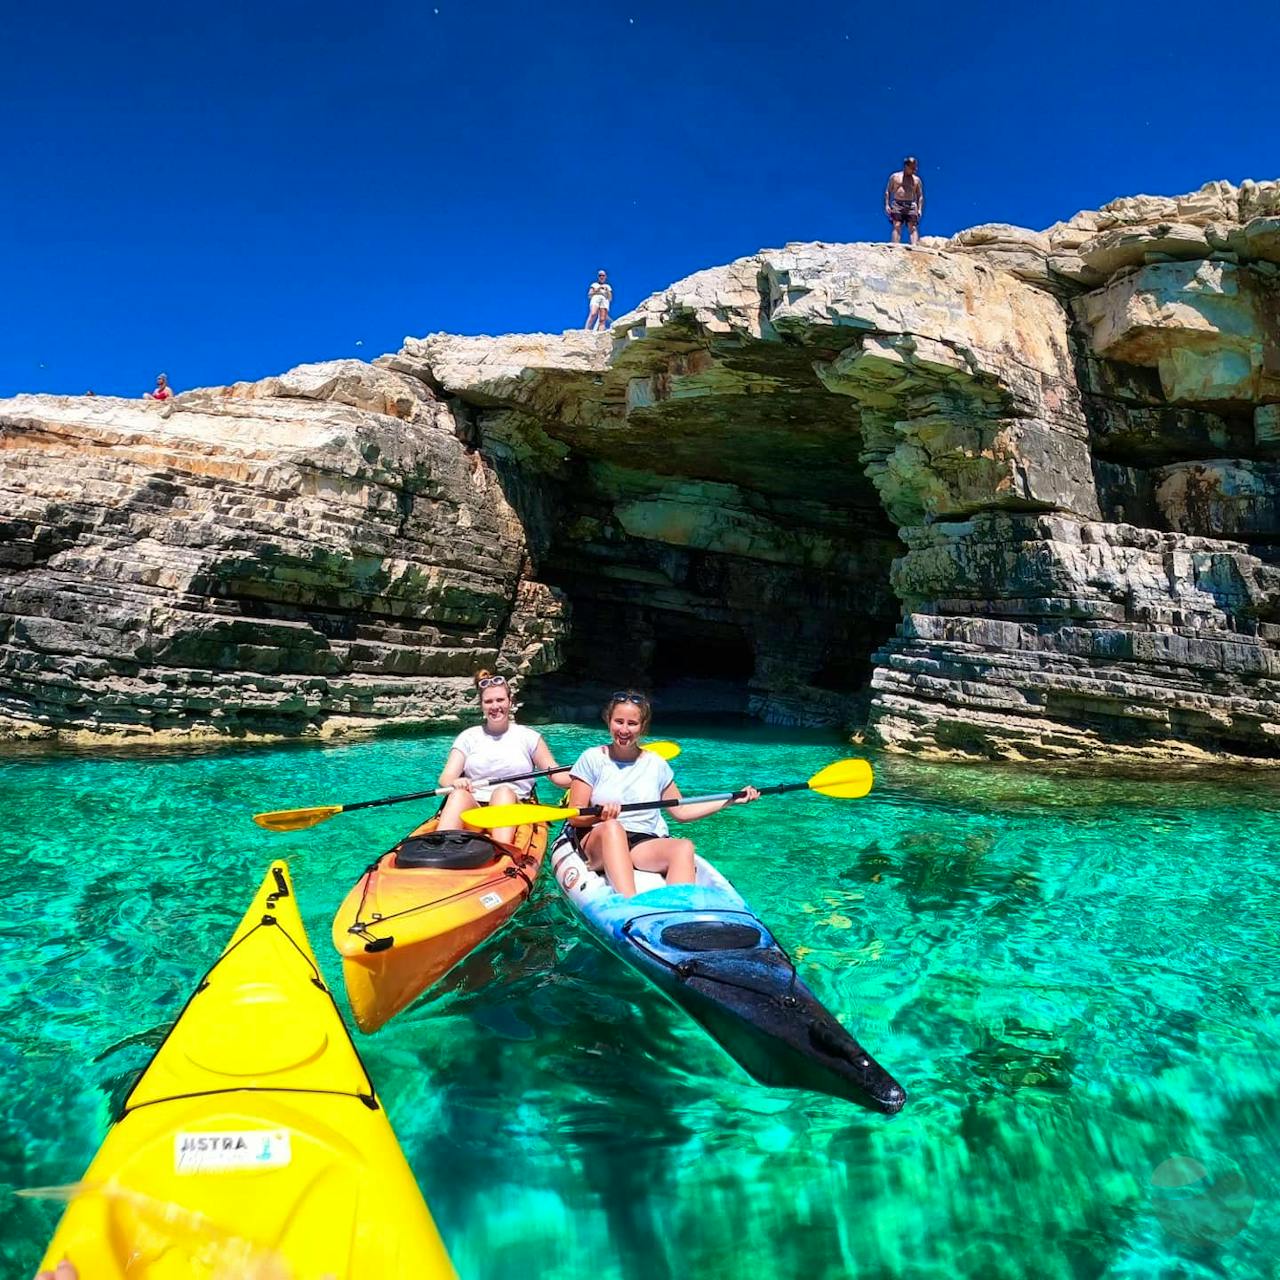 Istria kayak safari tour with cave experience - 5 hours!